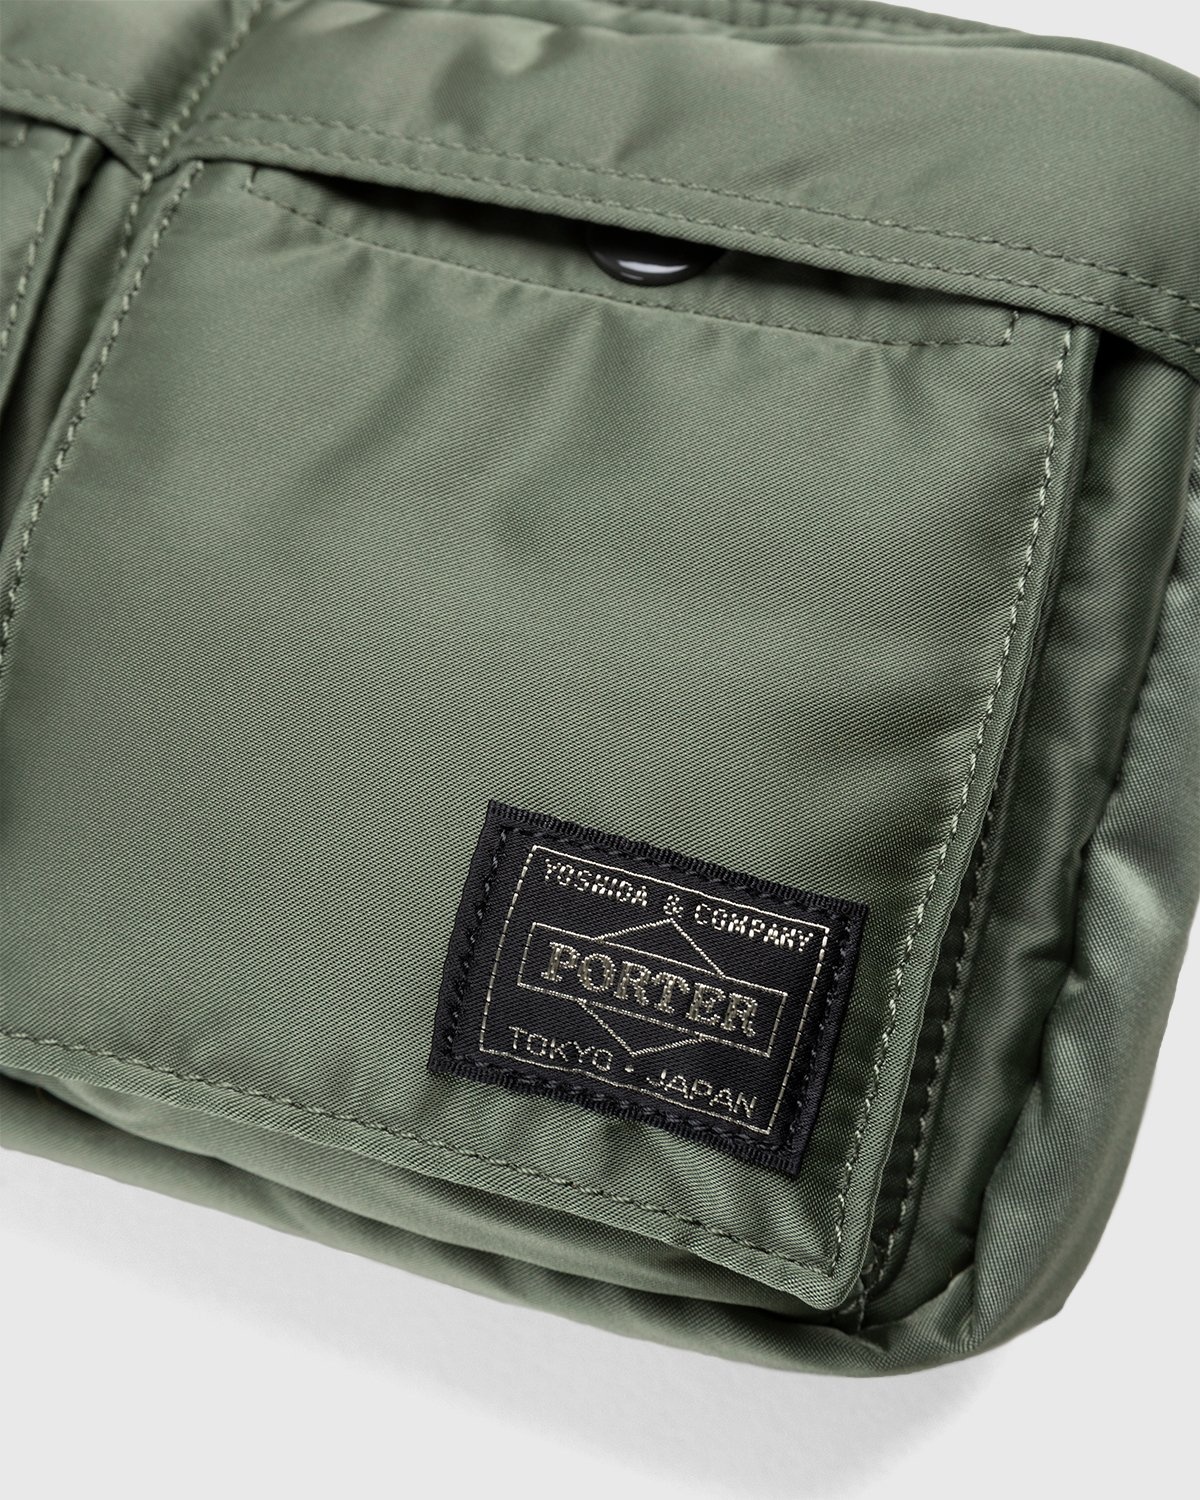 Porter-Yoshida & Co. – Tanker Shoulder Bag Sage Green - Pouches - Green - Image 6